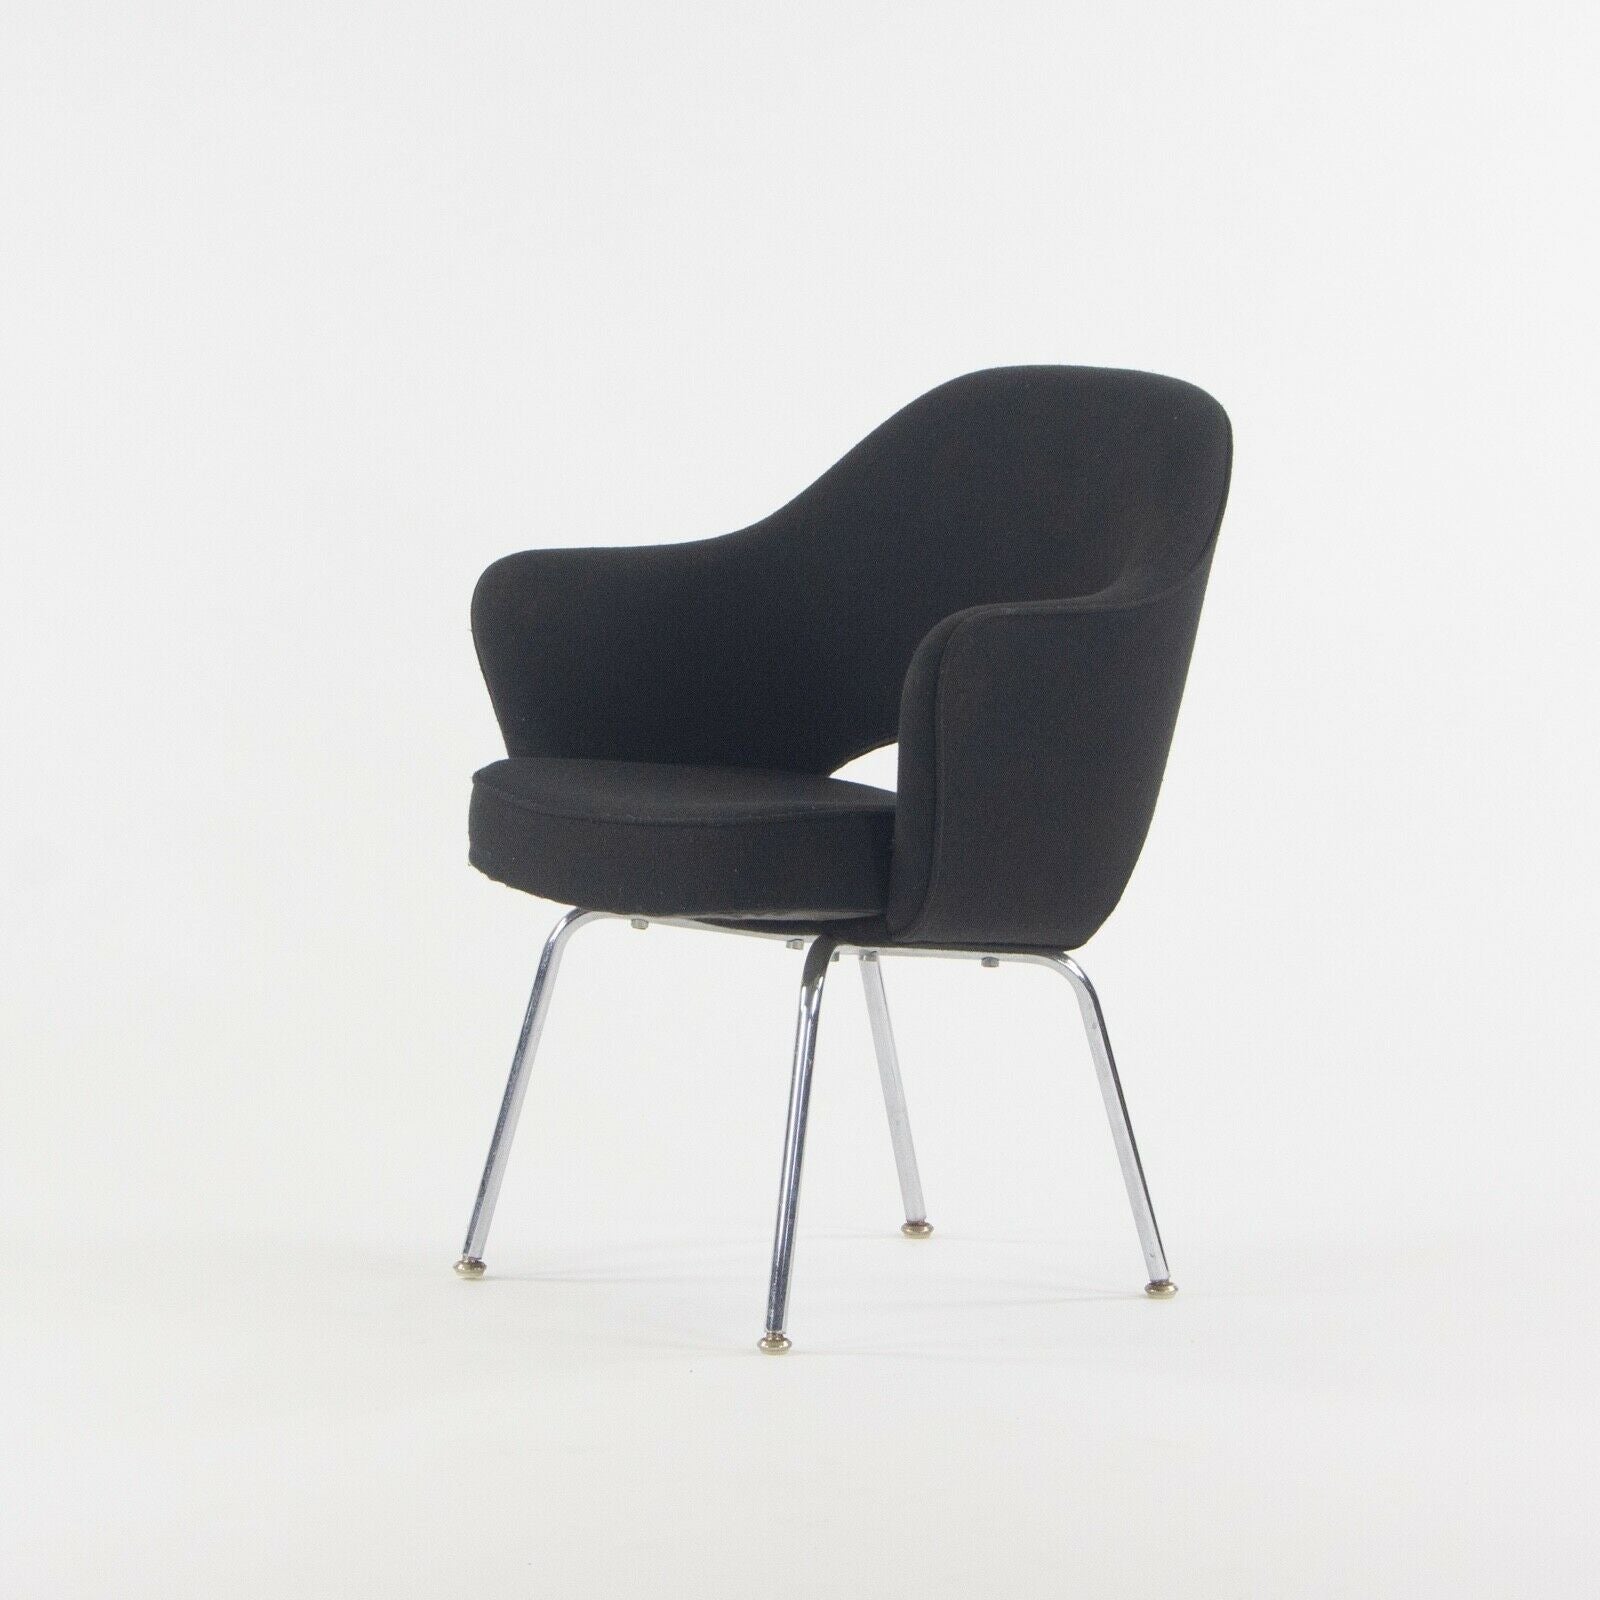 Model 71A Executive Arm Chair